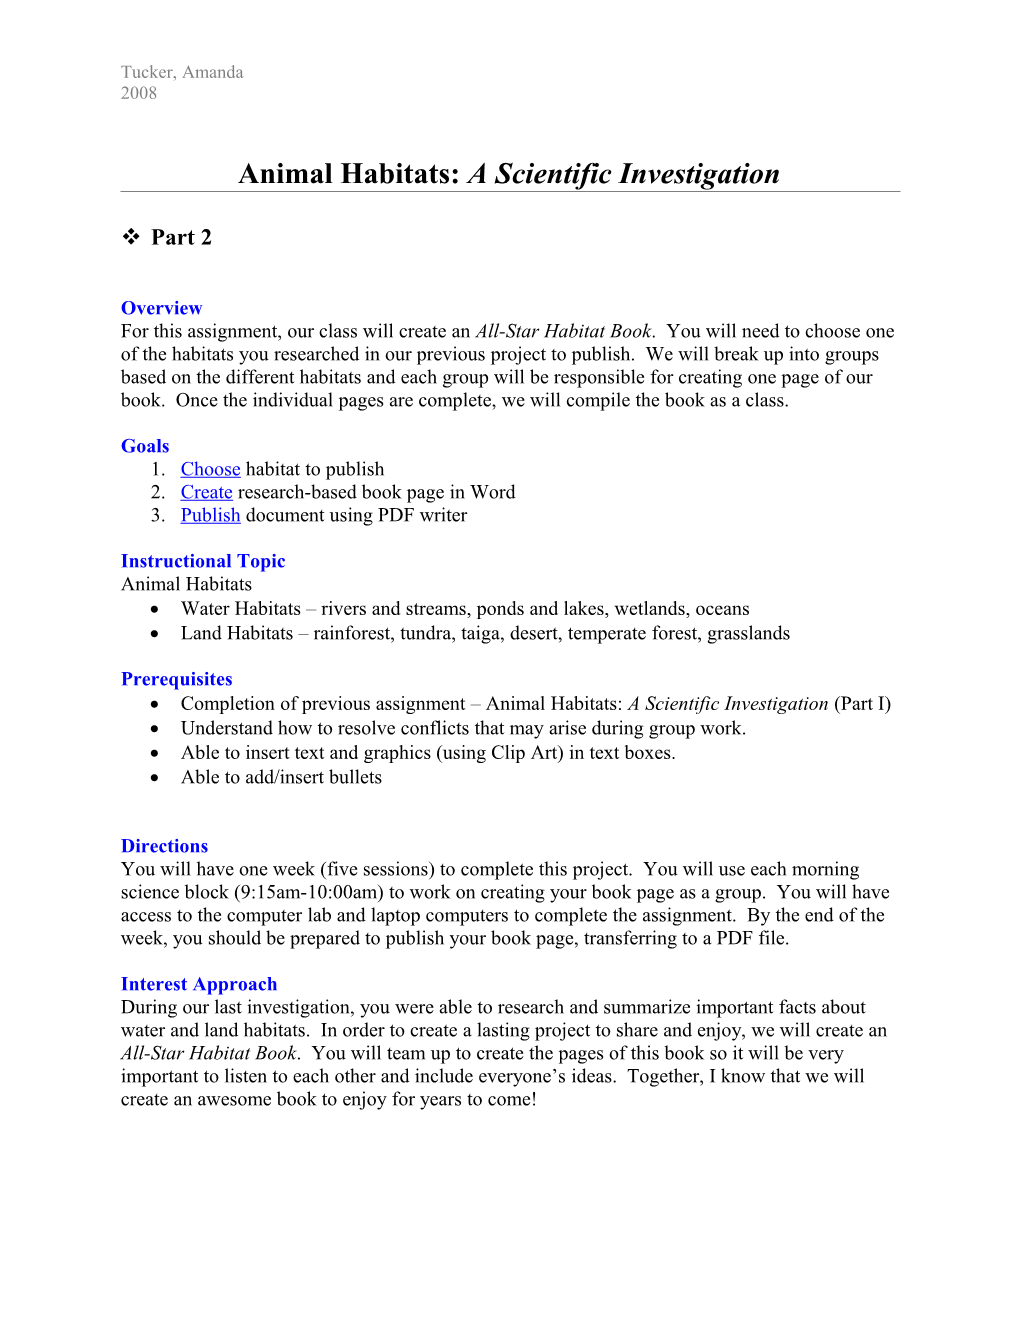 Animal Habitats: a Scientific Investigation